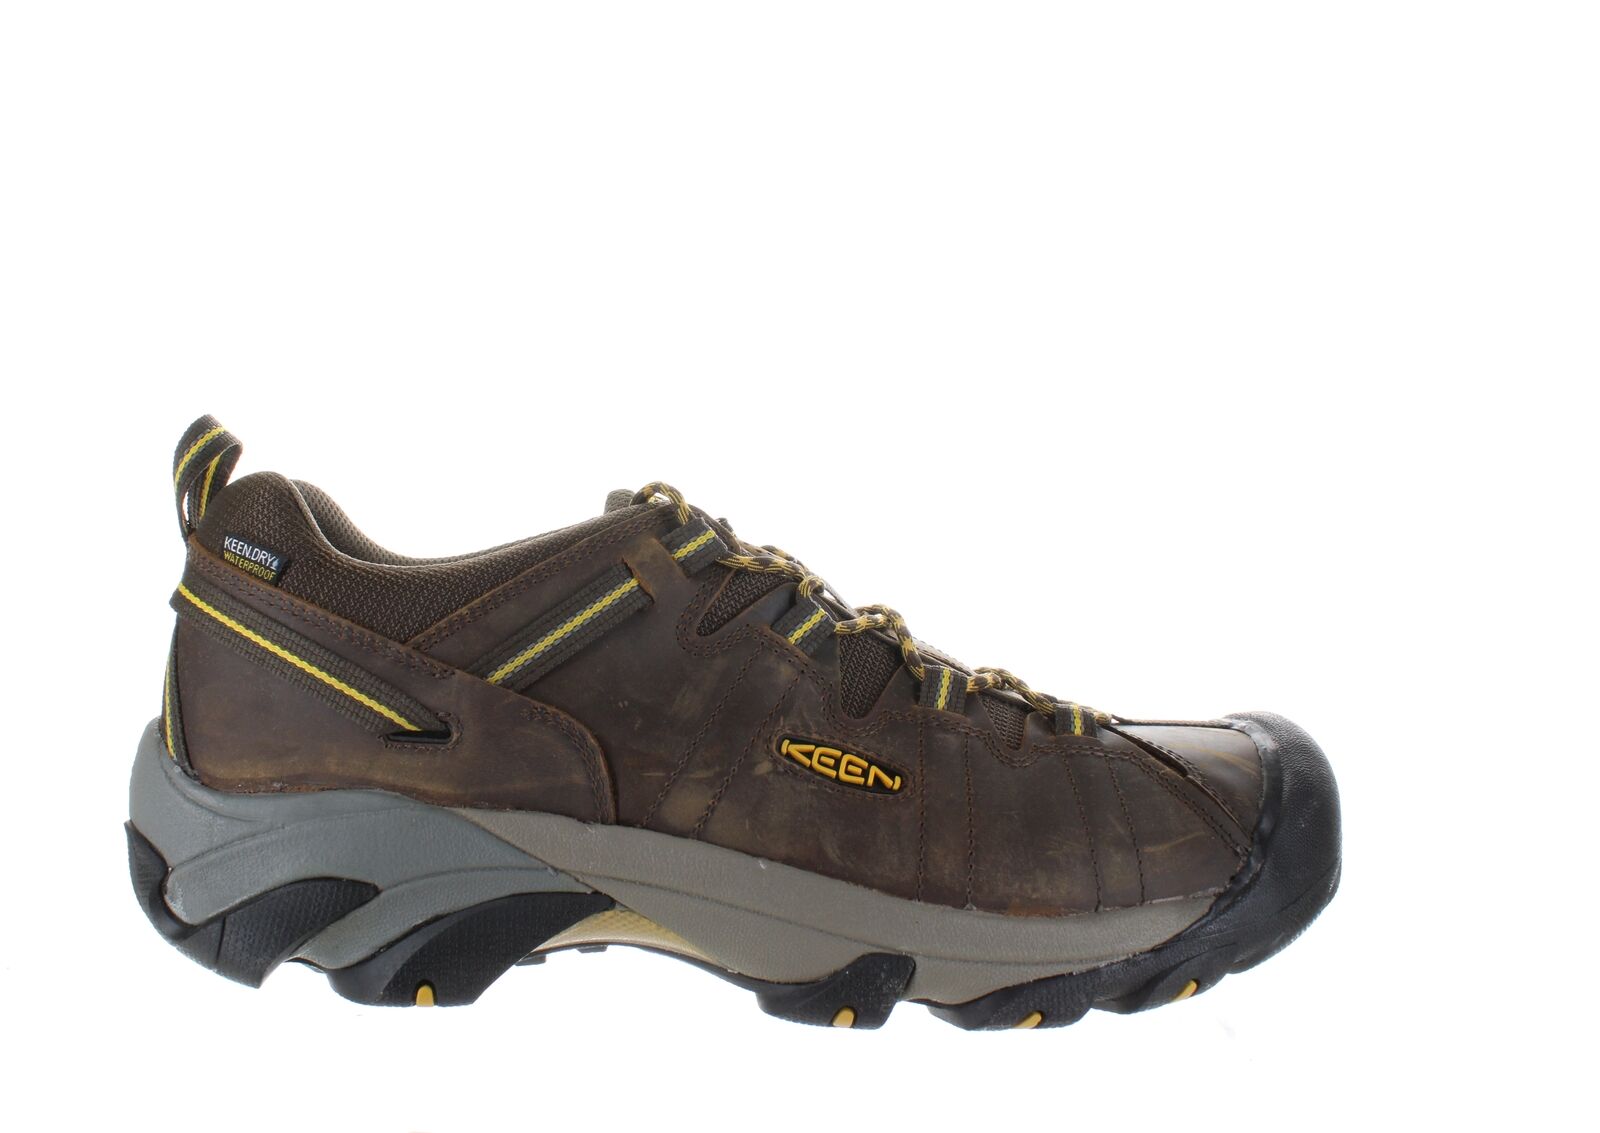 KEEN Mens Targhee Ii Cascade Brown/Golden Yellow Hiking Shoes Size 15 (2210149)